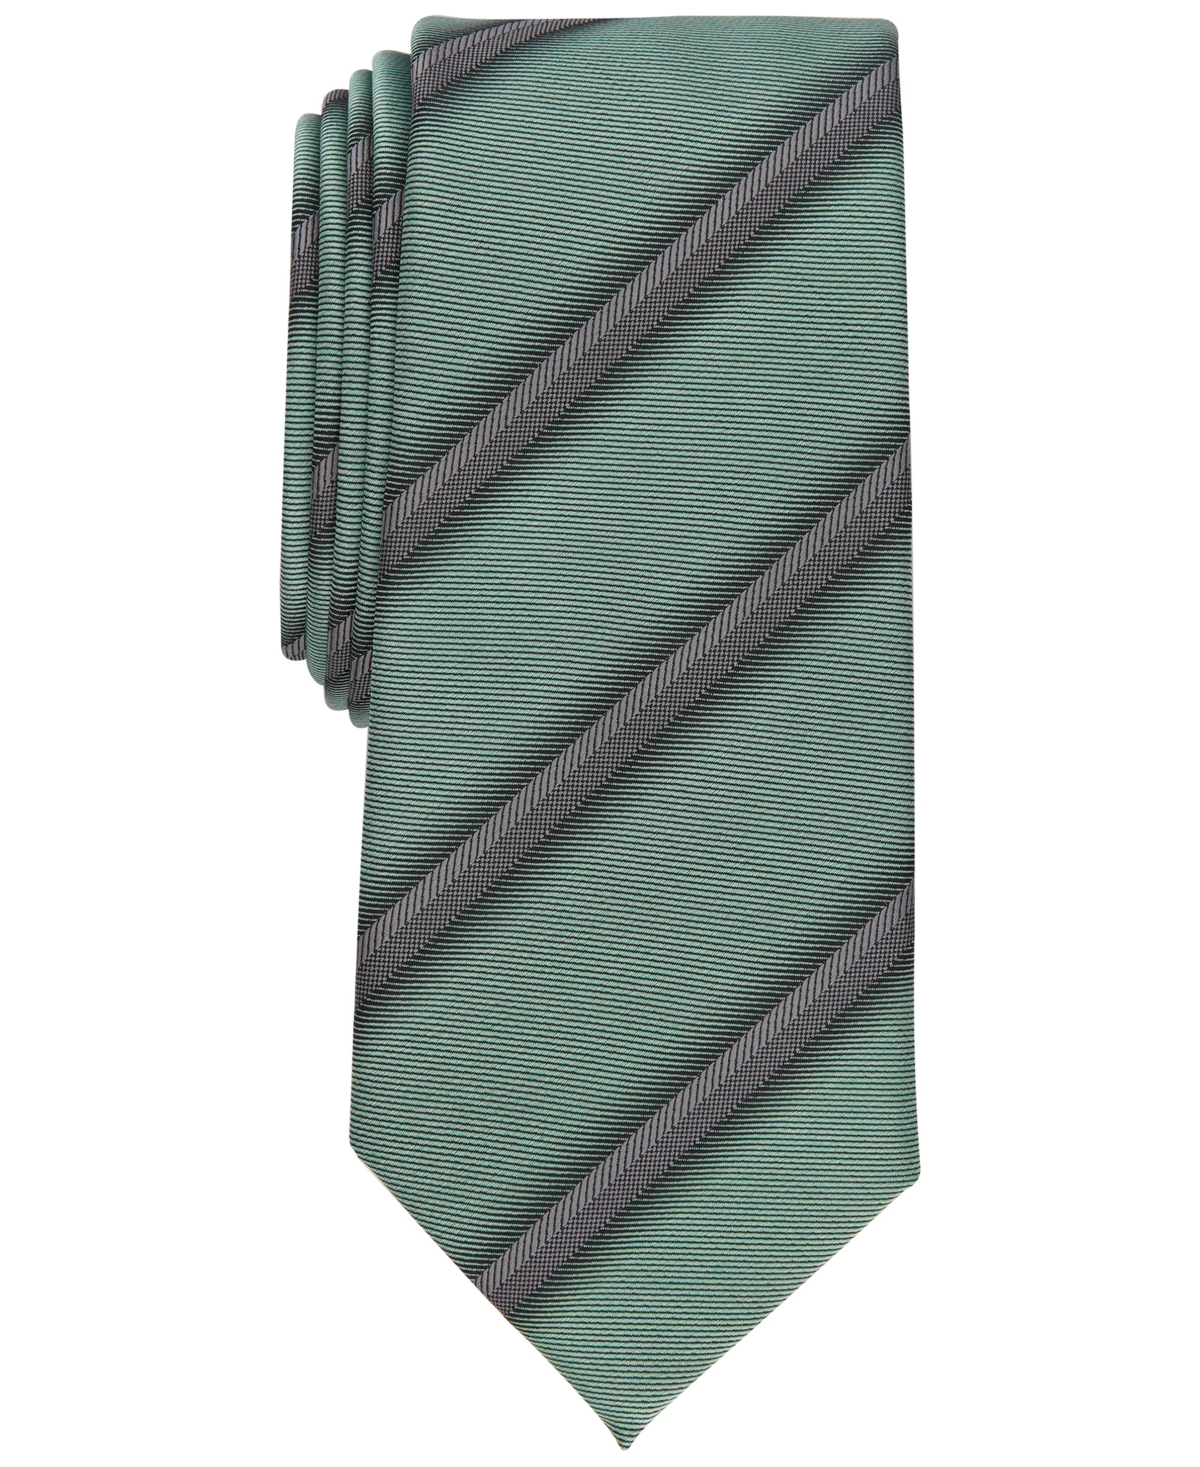 Men's Desmet Striped Slim Tie, Created for Macy's - Mint